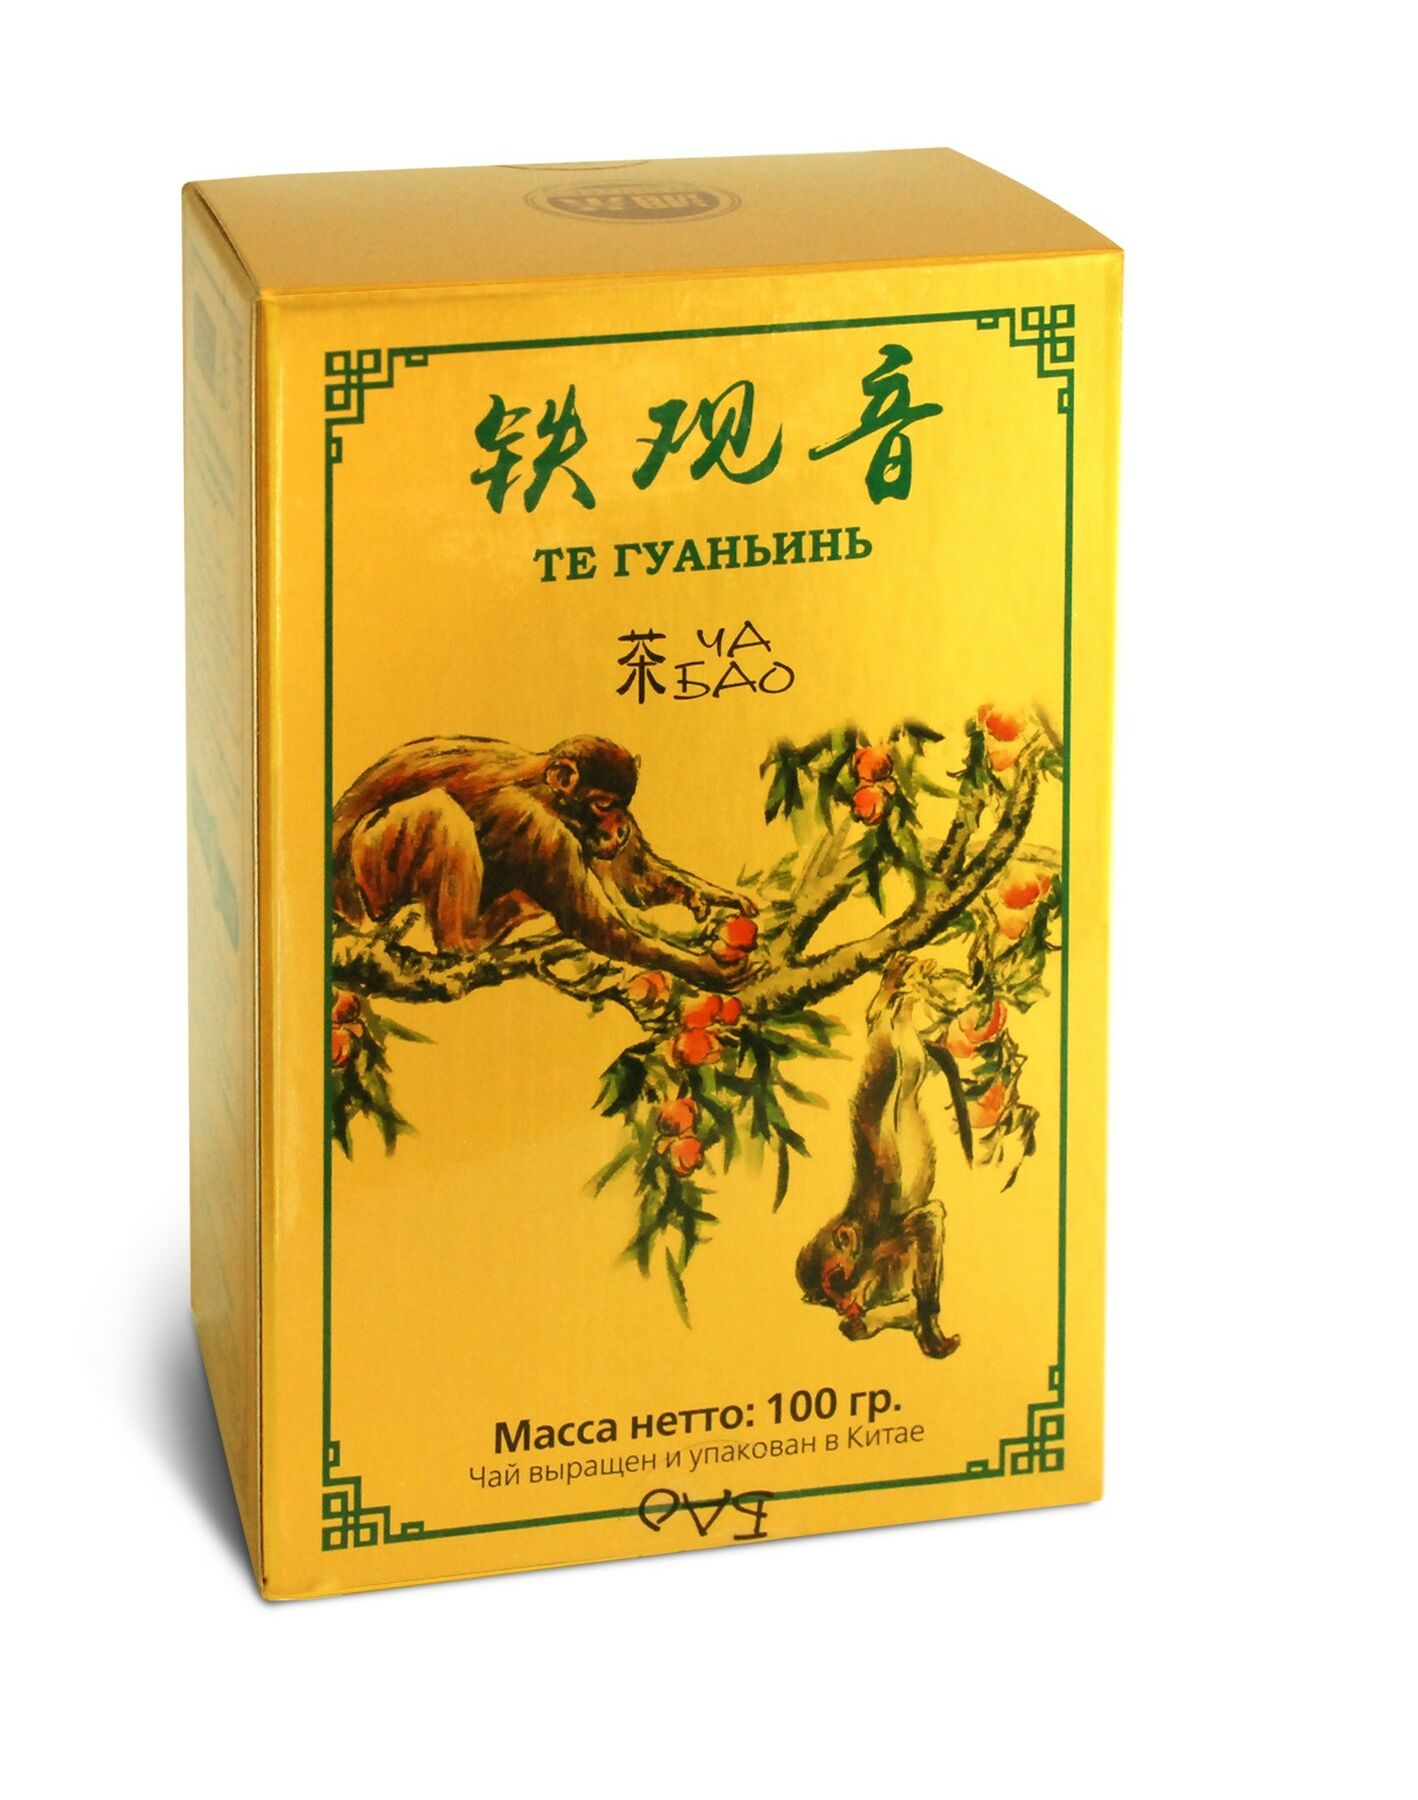 Чай "Ча Бао" Те Гуаньинь, картон (041), 100 гр.